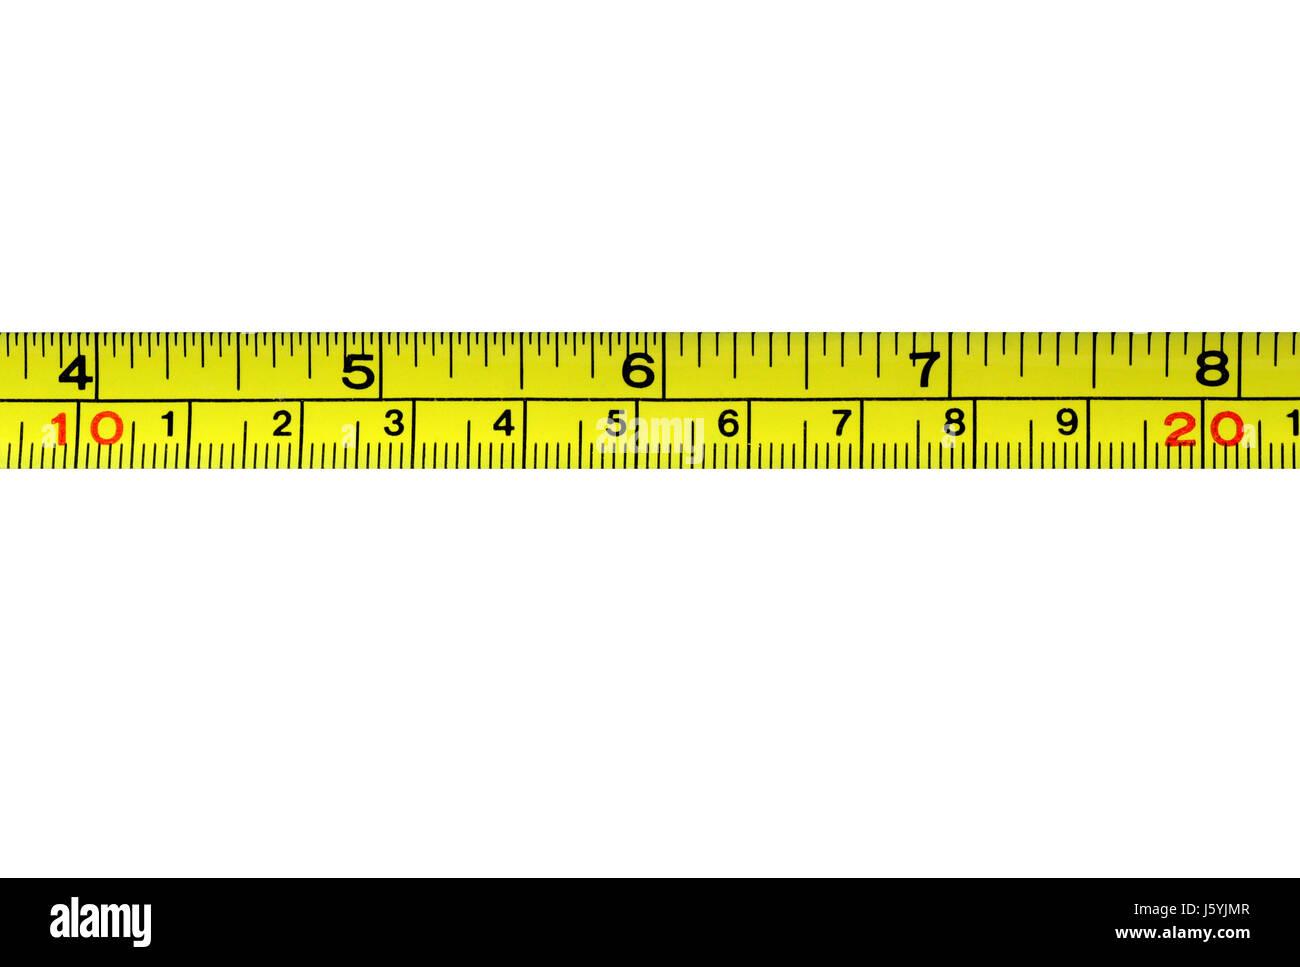 ruler measured sured measure meter measurement dial gauge length scale tape  Stock Photo - Alamy